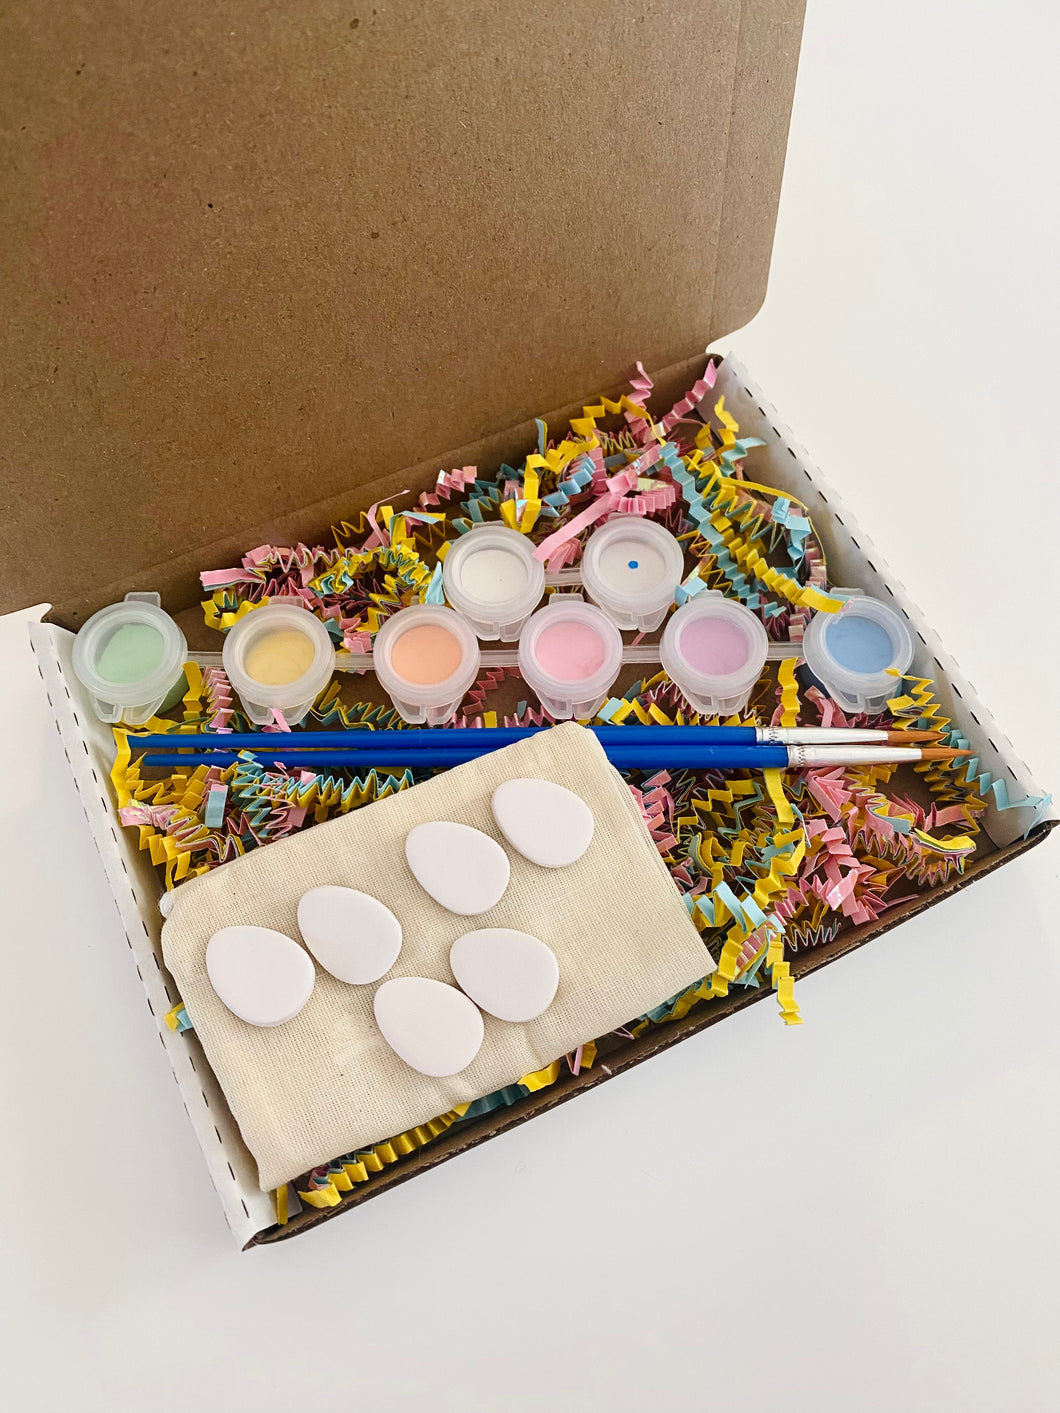 Paint-Your-Own Easter Egg Kit